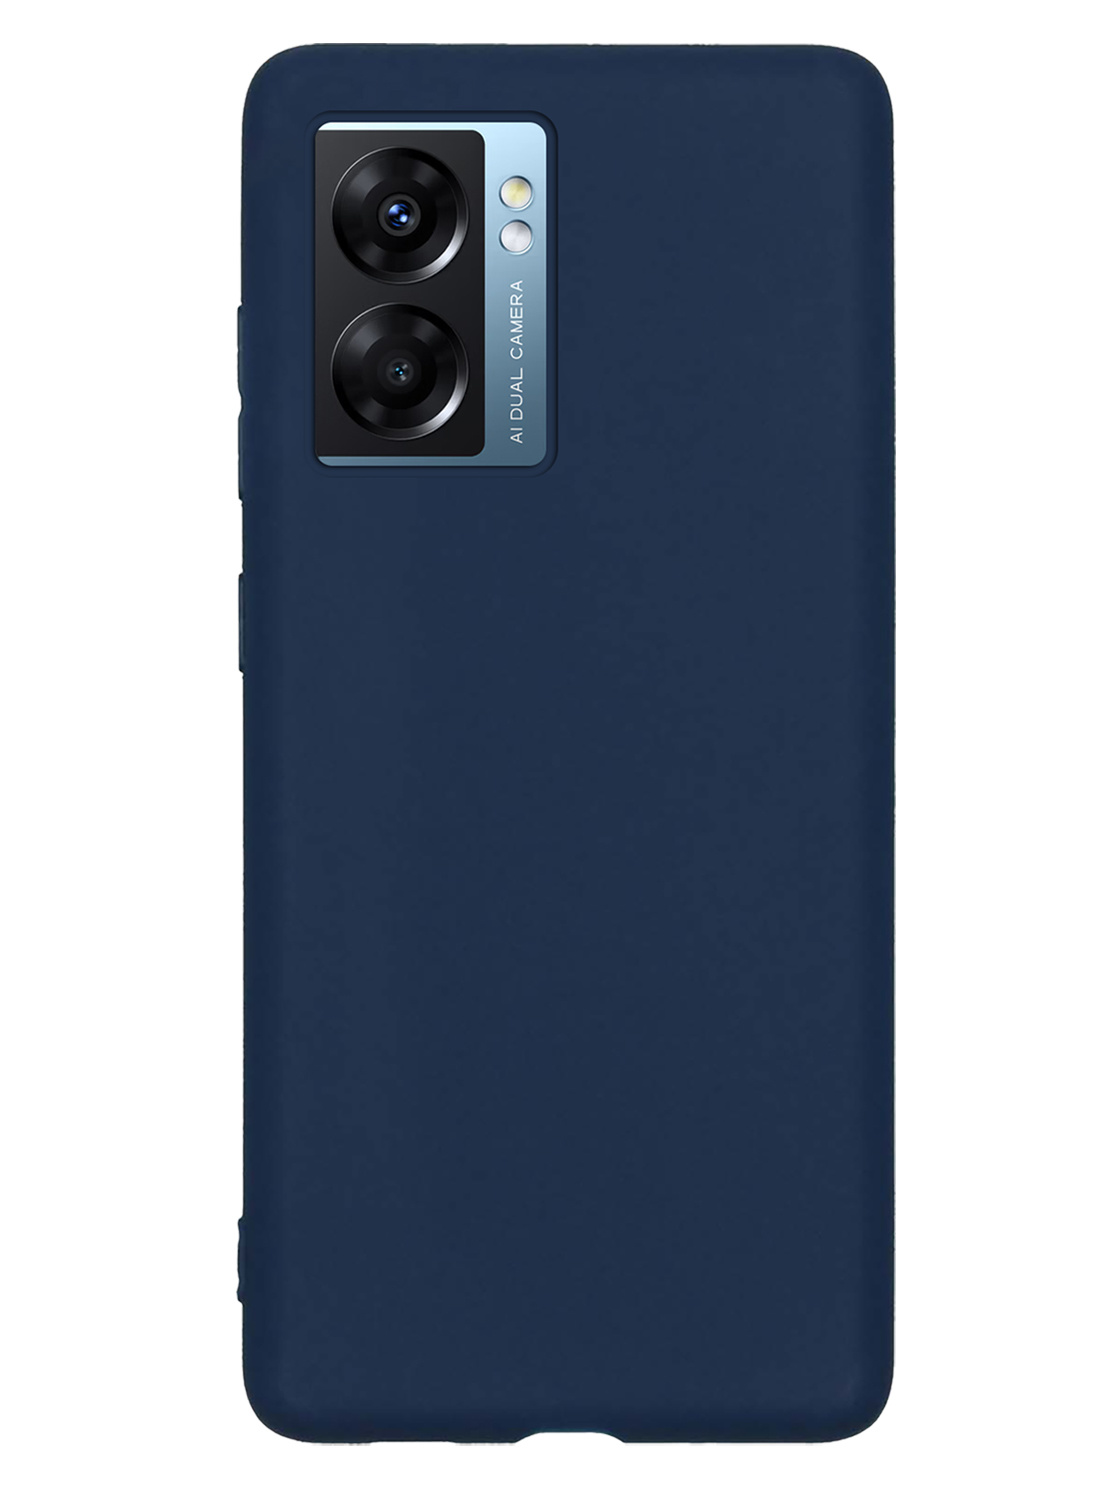 Nomfy Hoesje Geschikt voor OPPO A77 Hoesje Siliconen Cover Case - Hoes Geschikt voor OPPO A77 Hoes Back Case - Donkerblauw